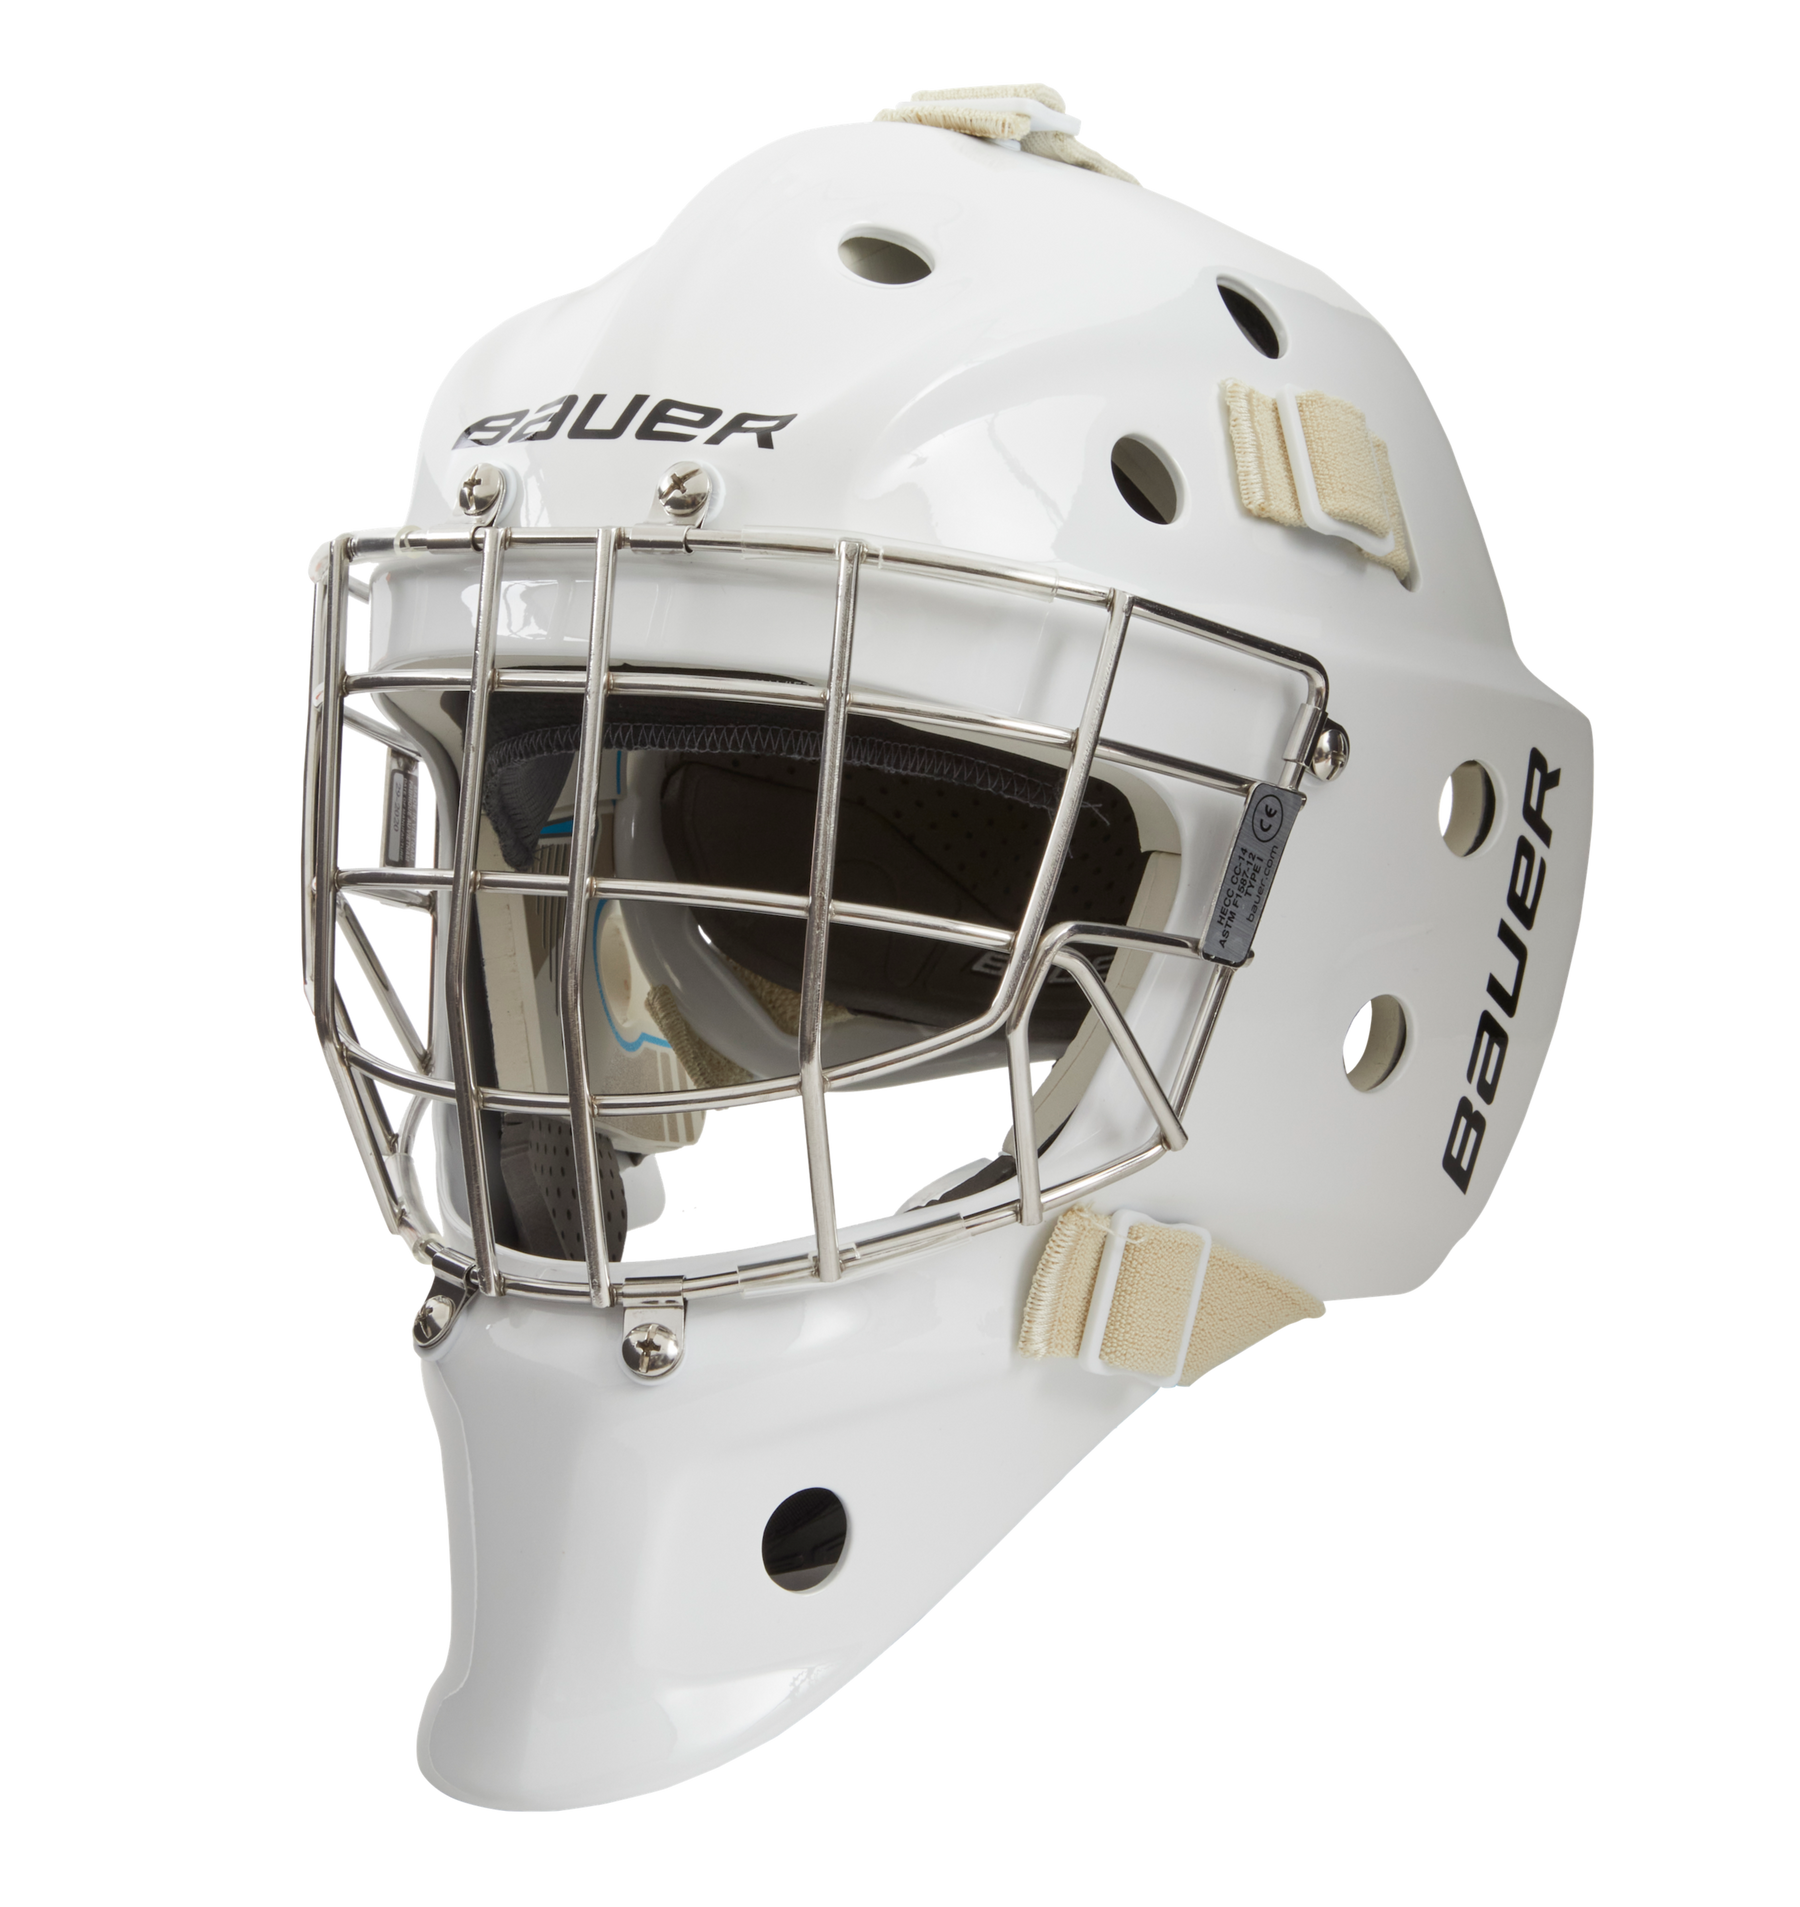 Bauer 940 Junior Goalie Mask